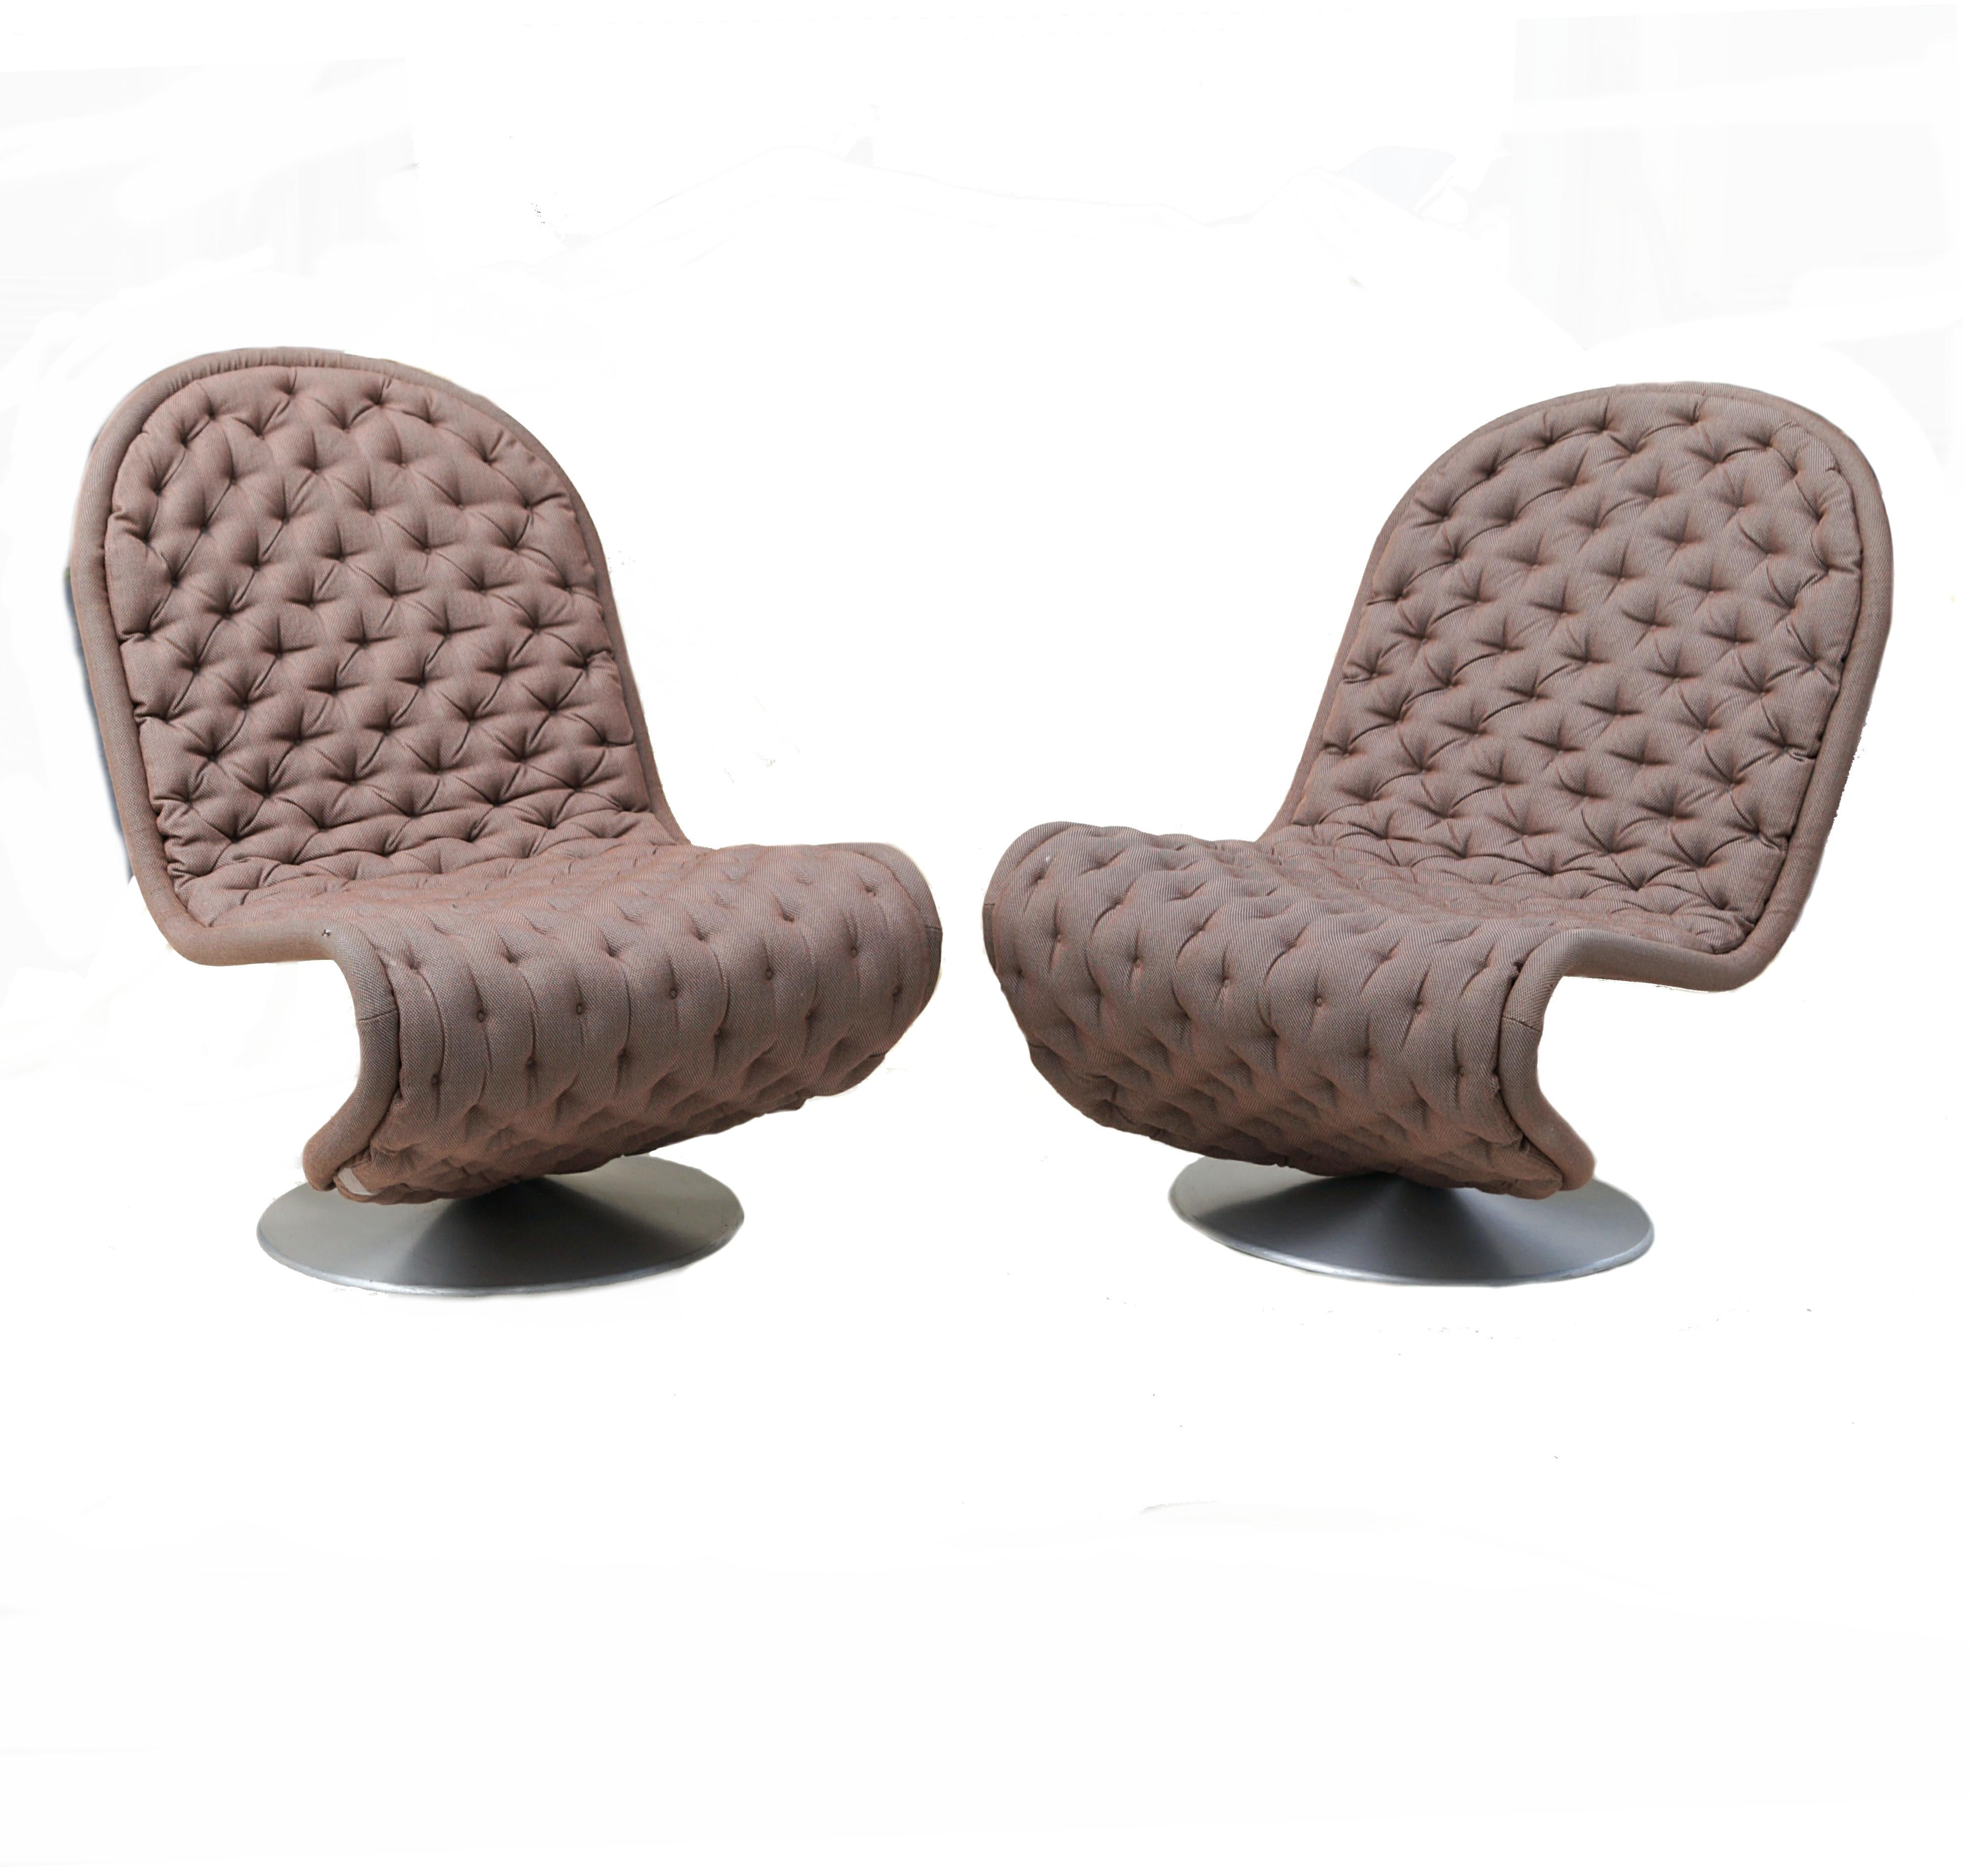 Pair of Verner Panton tufted 123 lounge chairs. Marked Verner Panton.